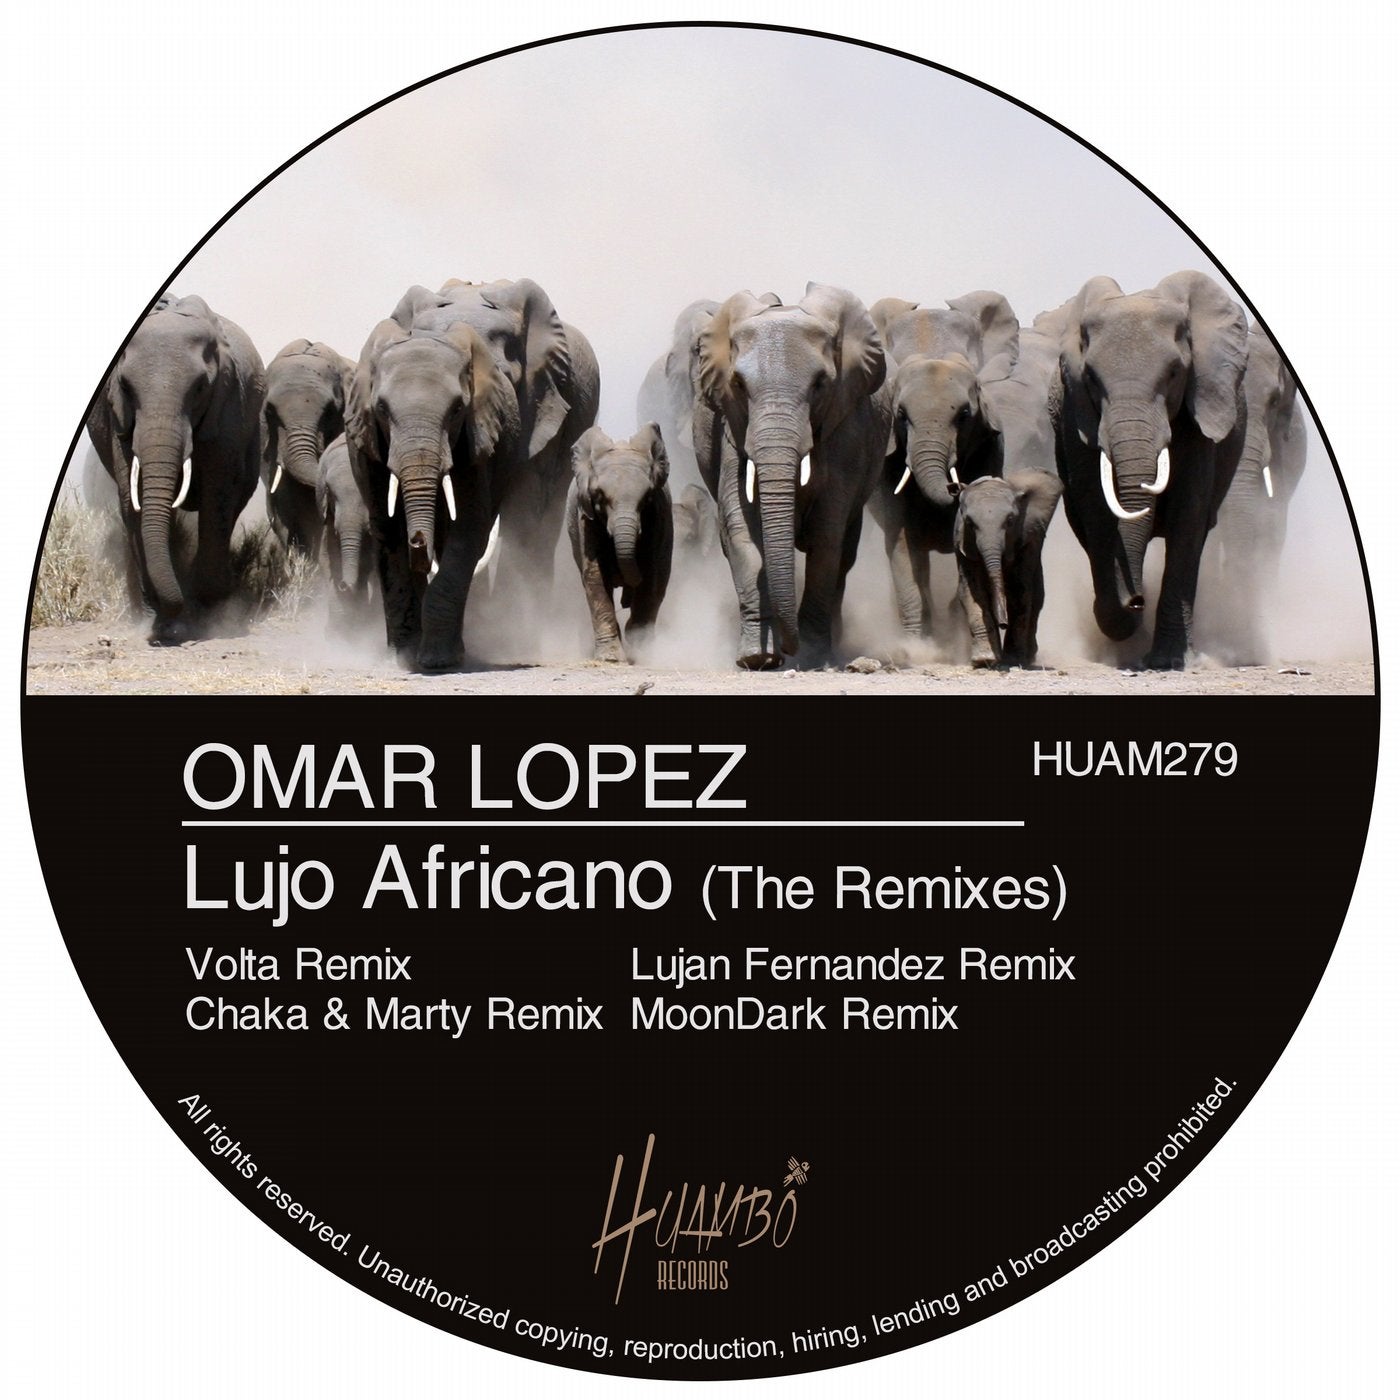 Lujo Africano (The Remixes)